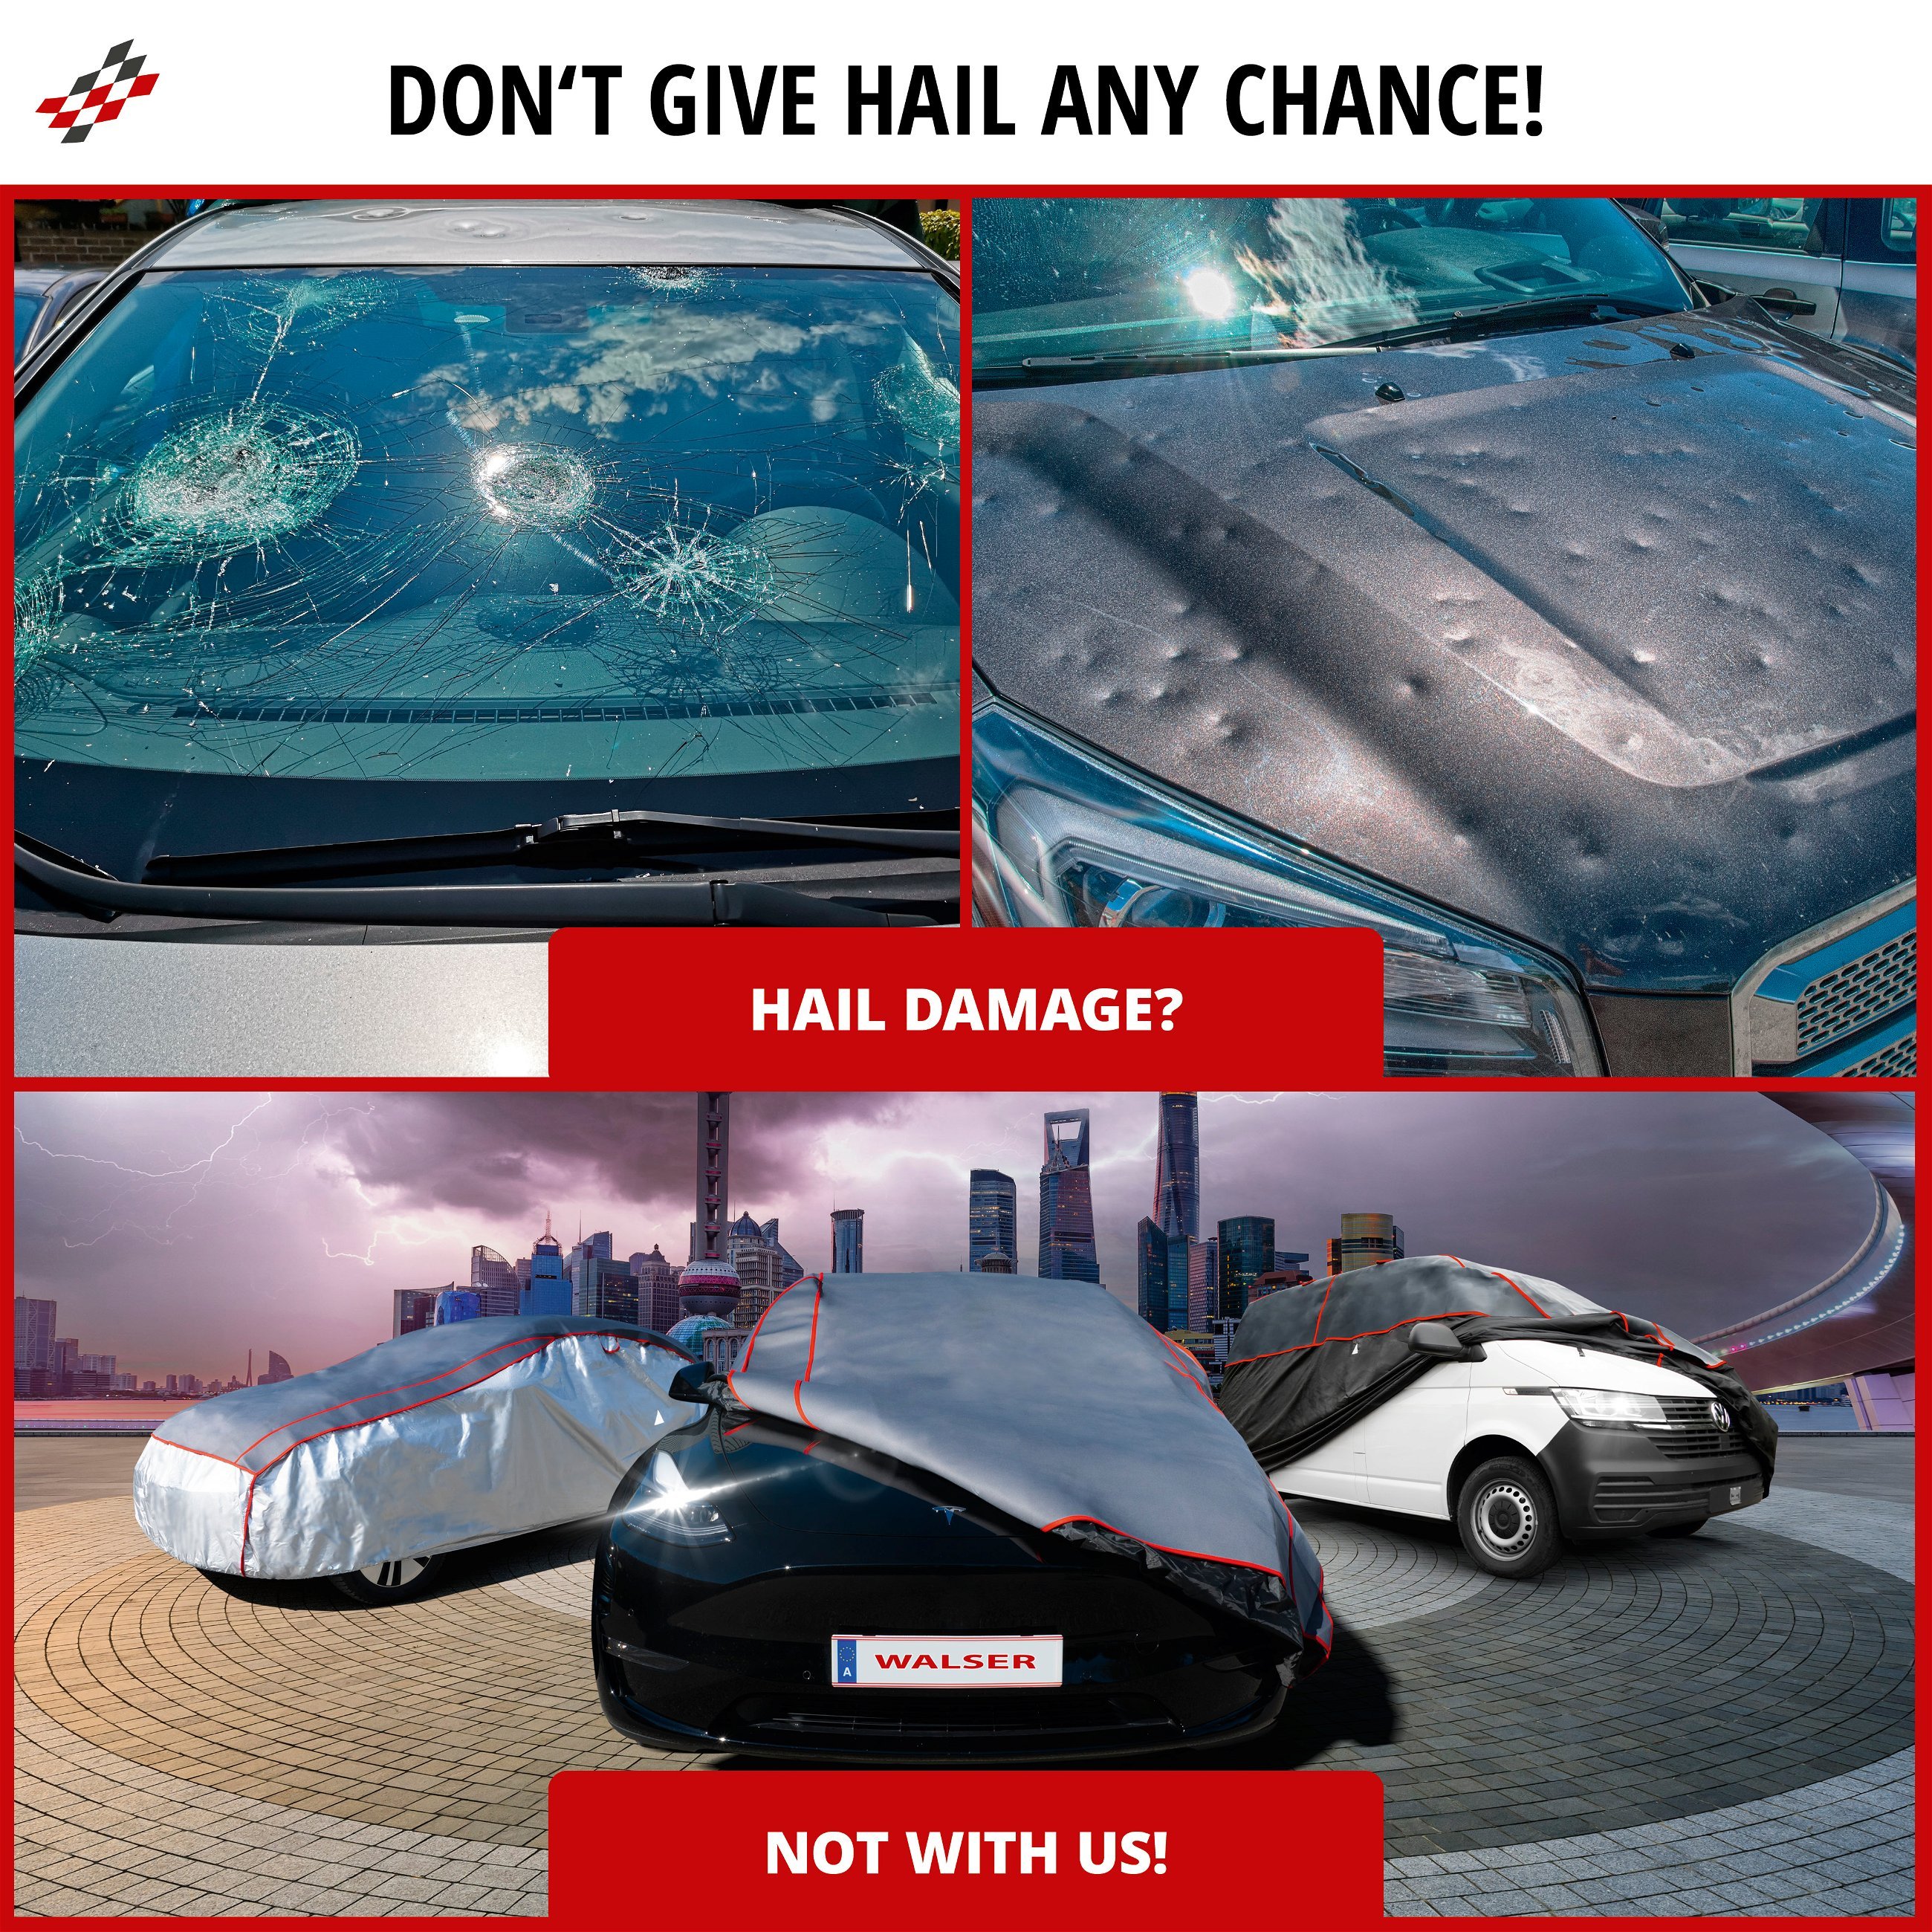 Bus hail protection cover Premium Hybrid size L